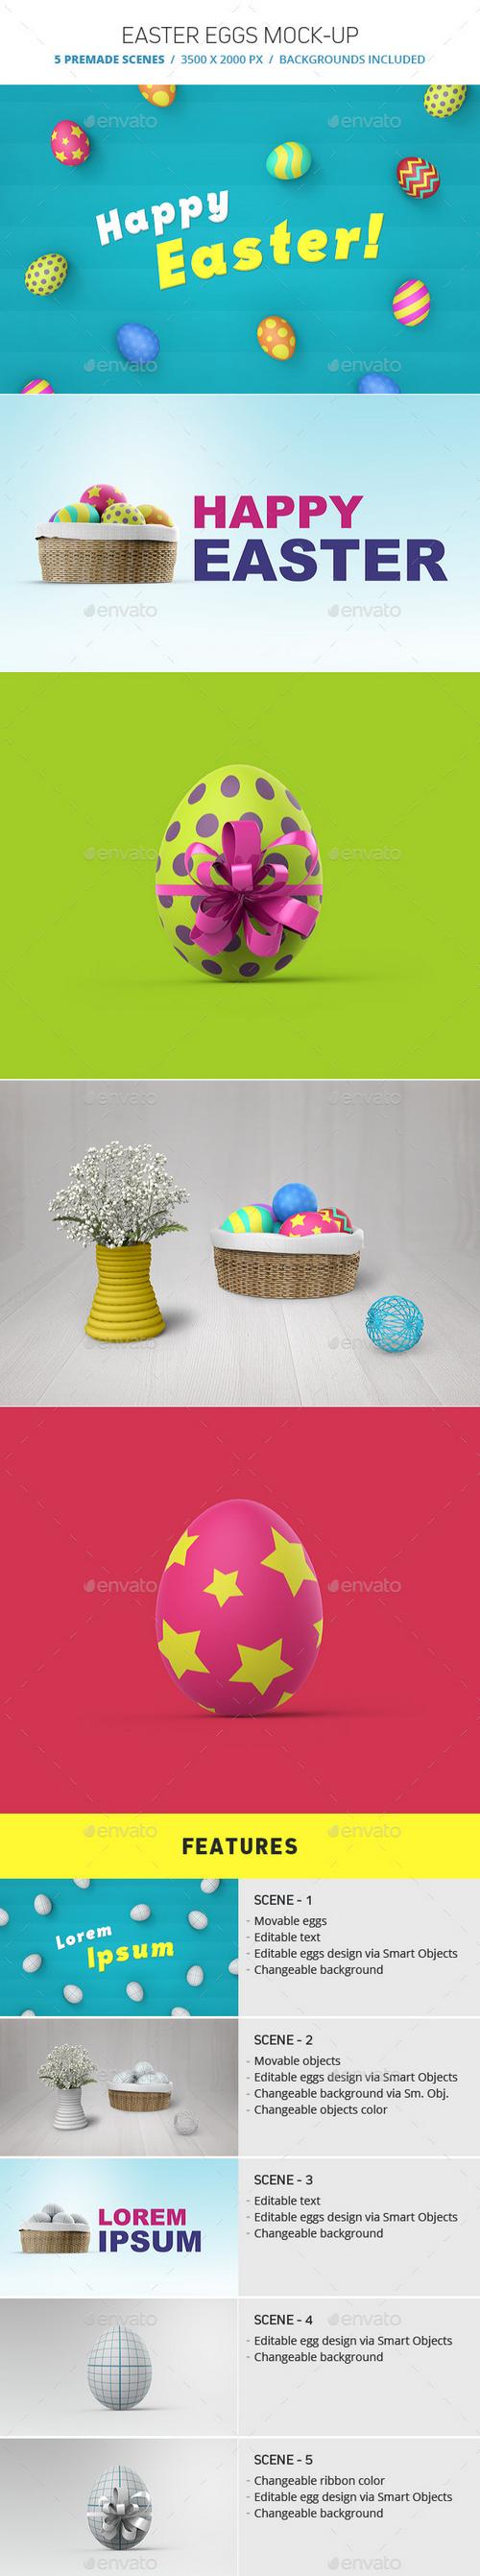 Graphicriver - Easter Eggs Mockup 10872711